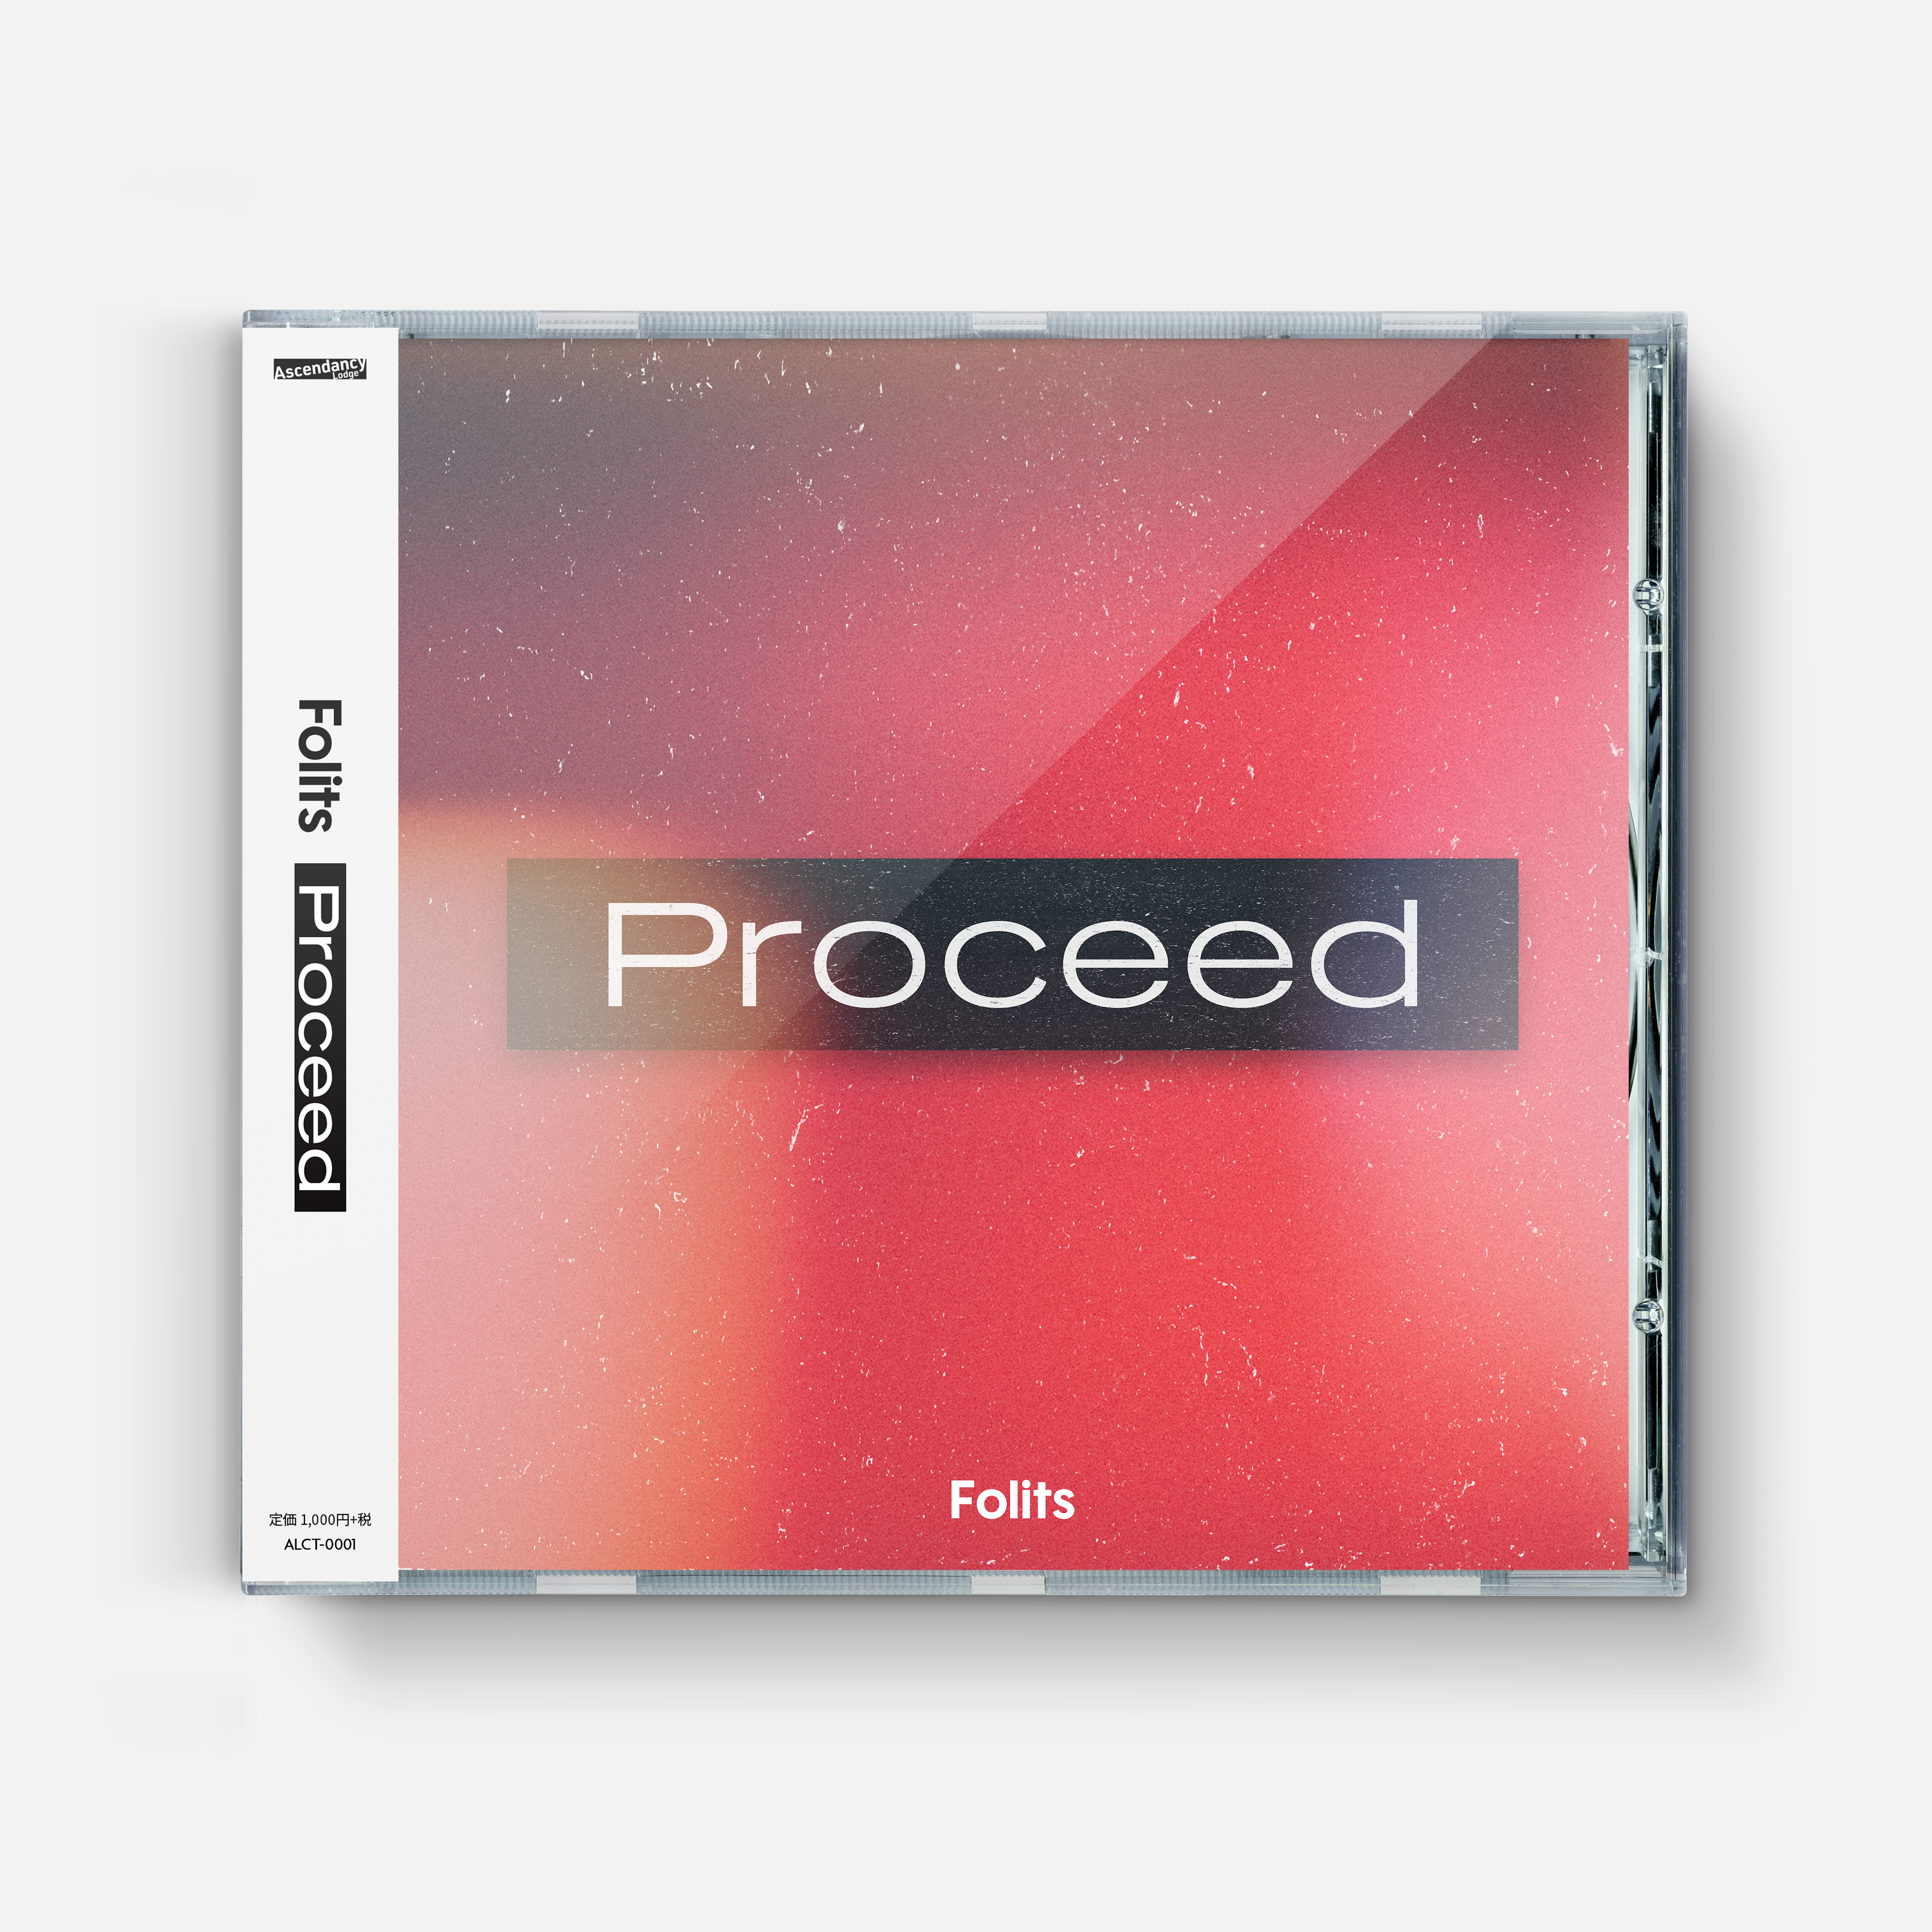 [CD Single] Folits - Proceed - ALCT-0001